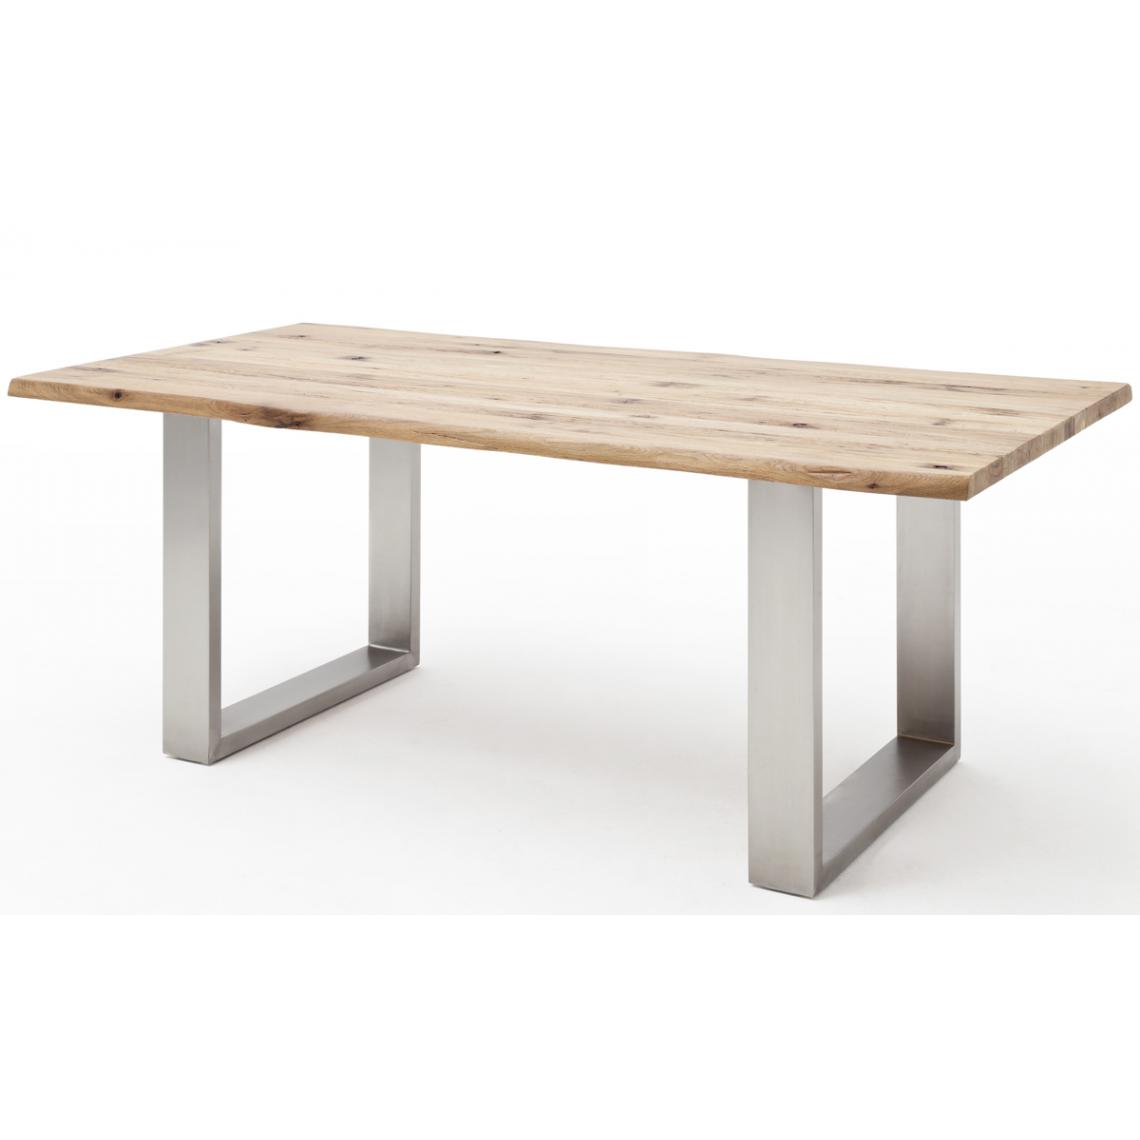 Pegane - Table à manger / table diner en chêne massif teinte chêne sauvage - L.240 x H.77 x P.100 cm -PEGANE- - Tables à manger